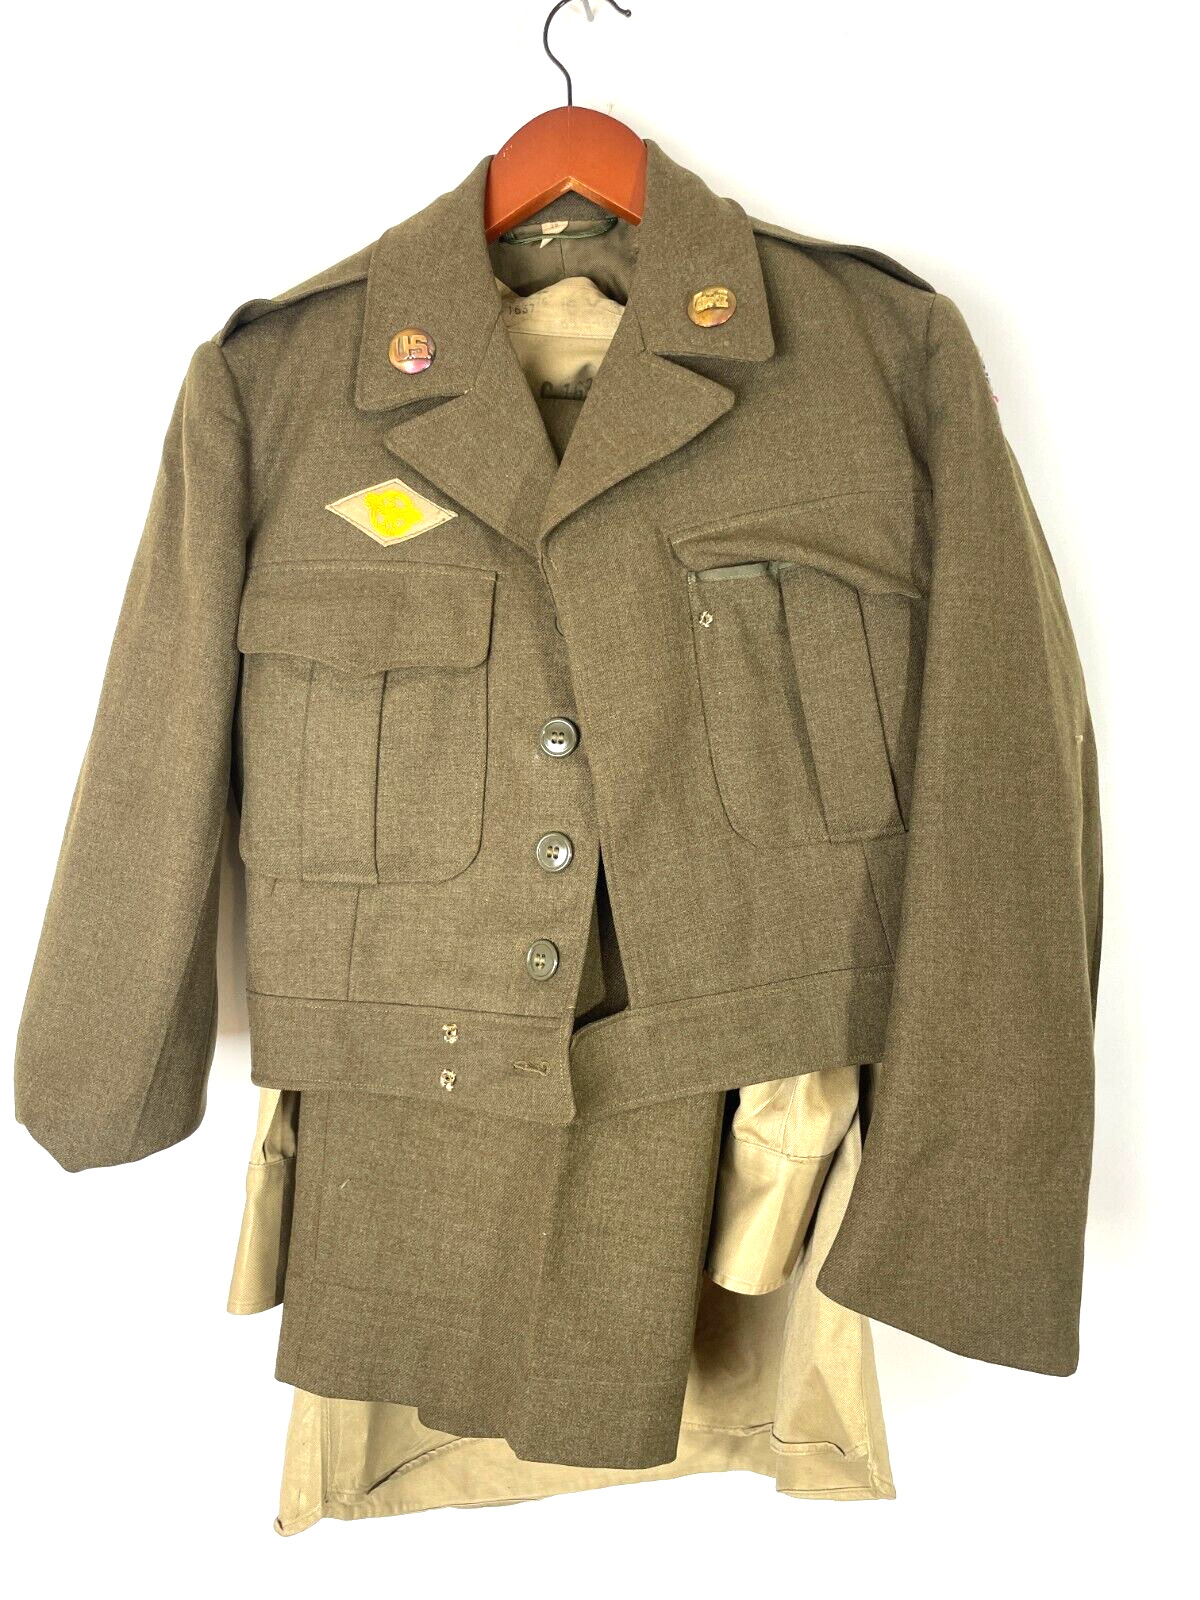 VTG US Military Men\'s 1950s Ike Jacket Army Uniform Pants Shirt etc Identified